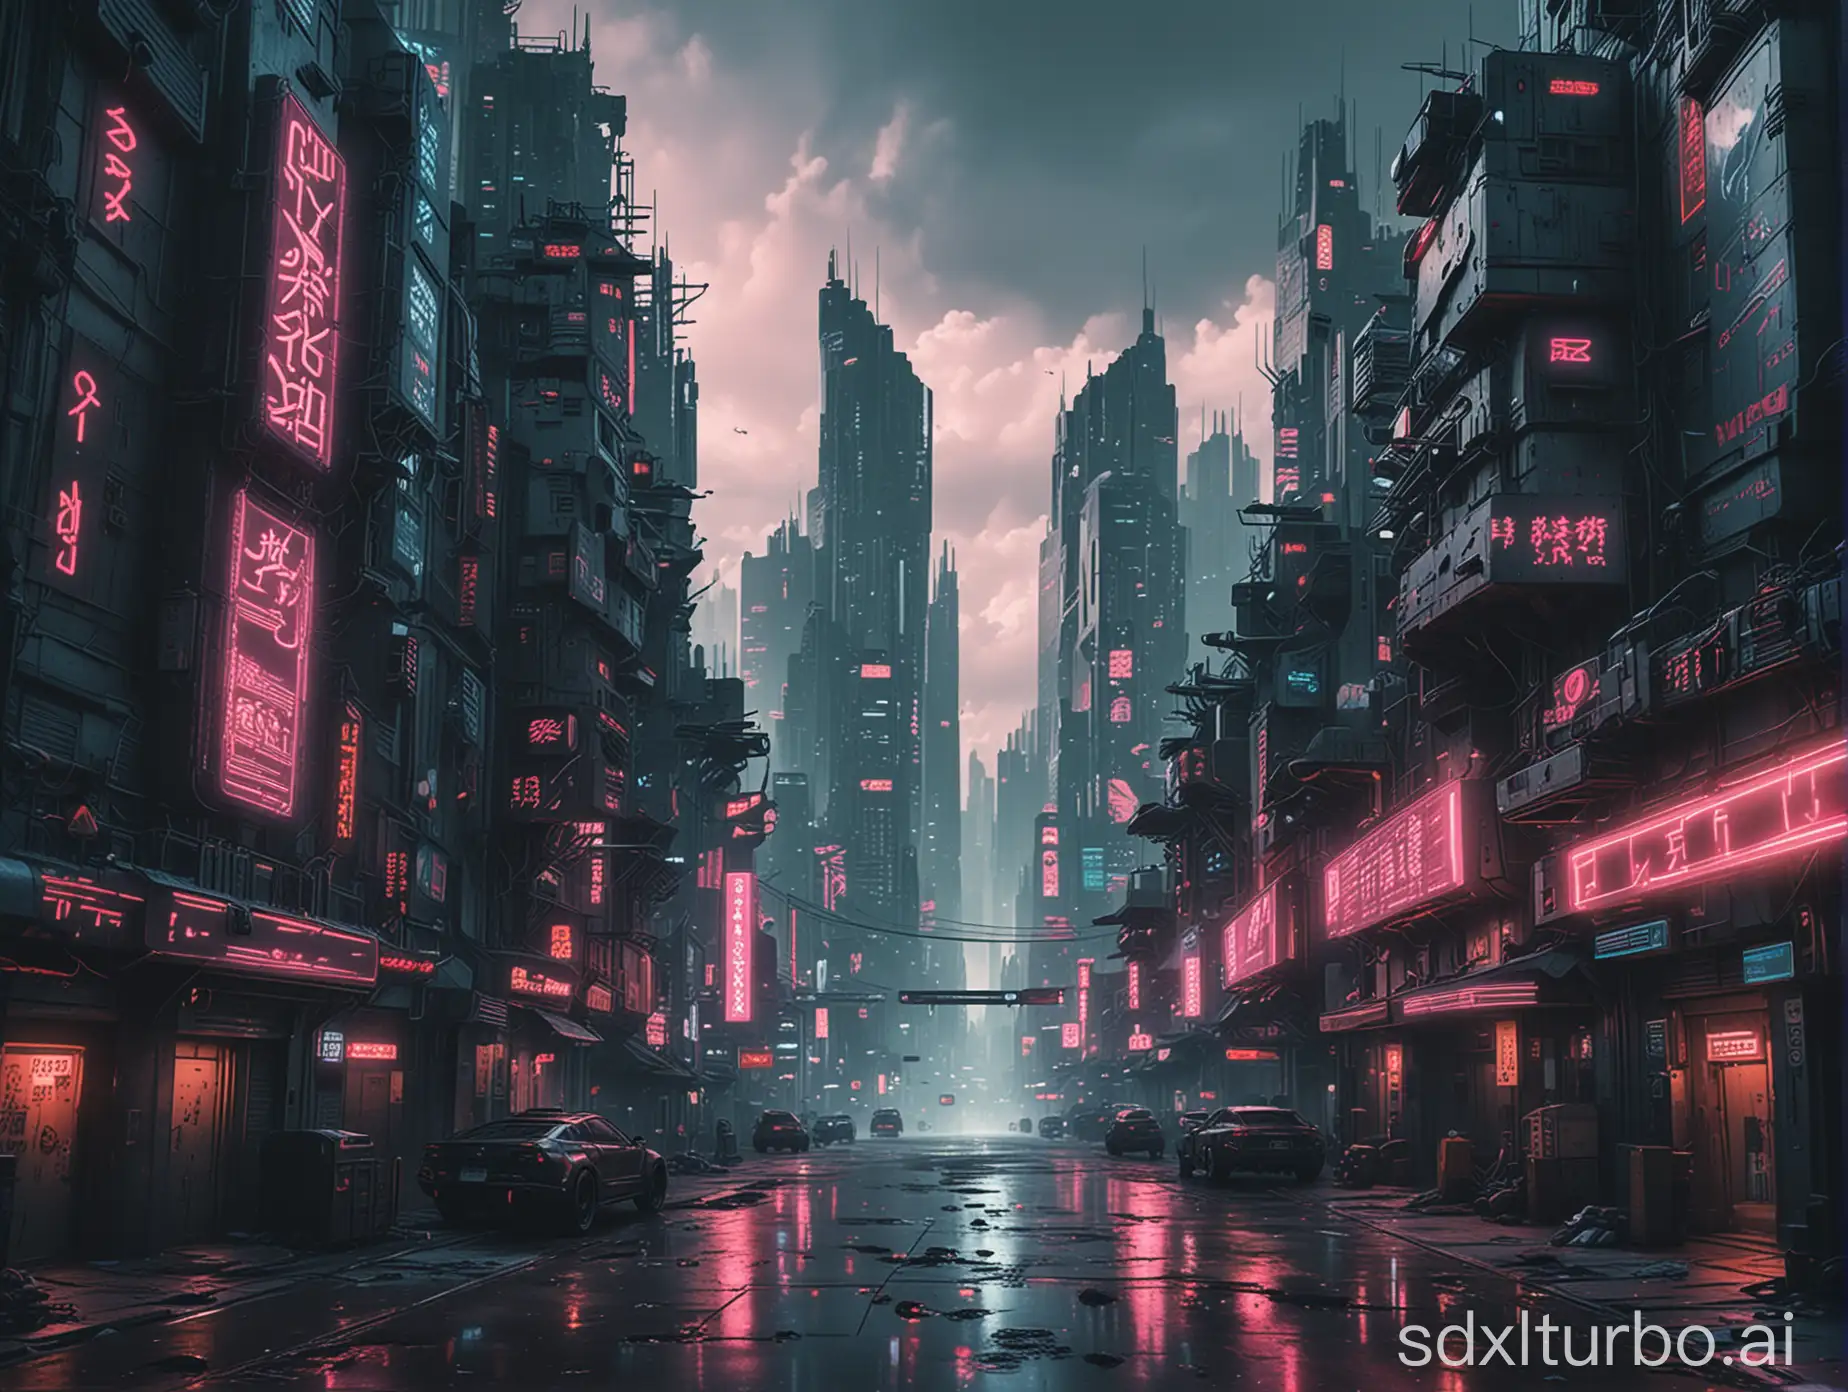 Futuristic-Cyberpunk-Cityscape-with-Glowing-Neon-Lights